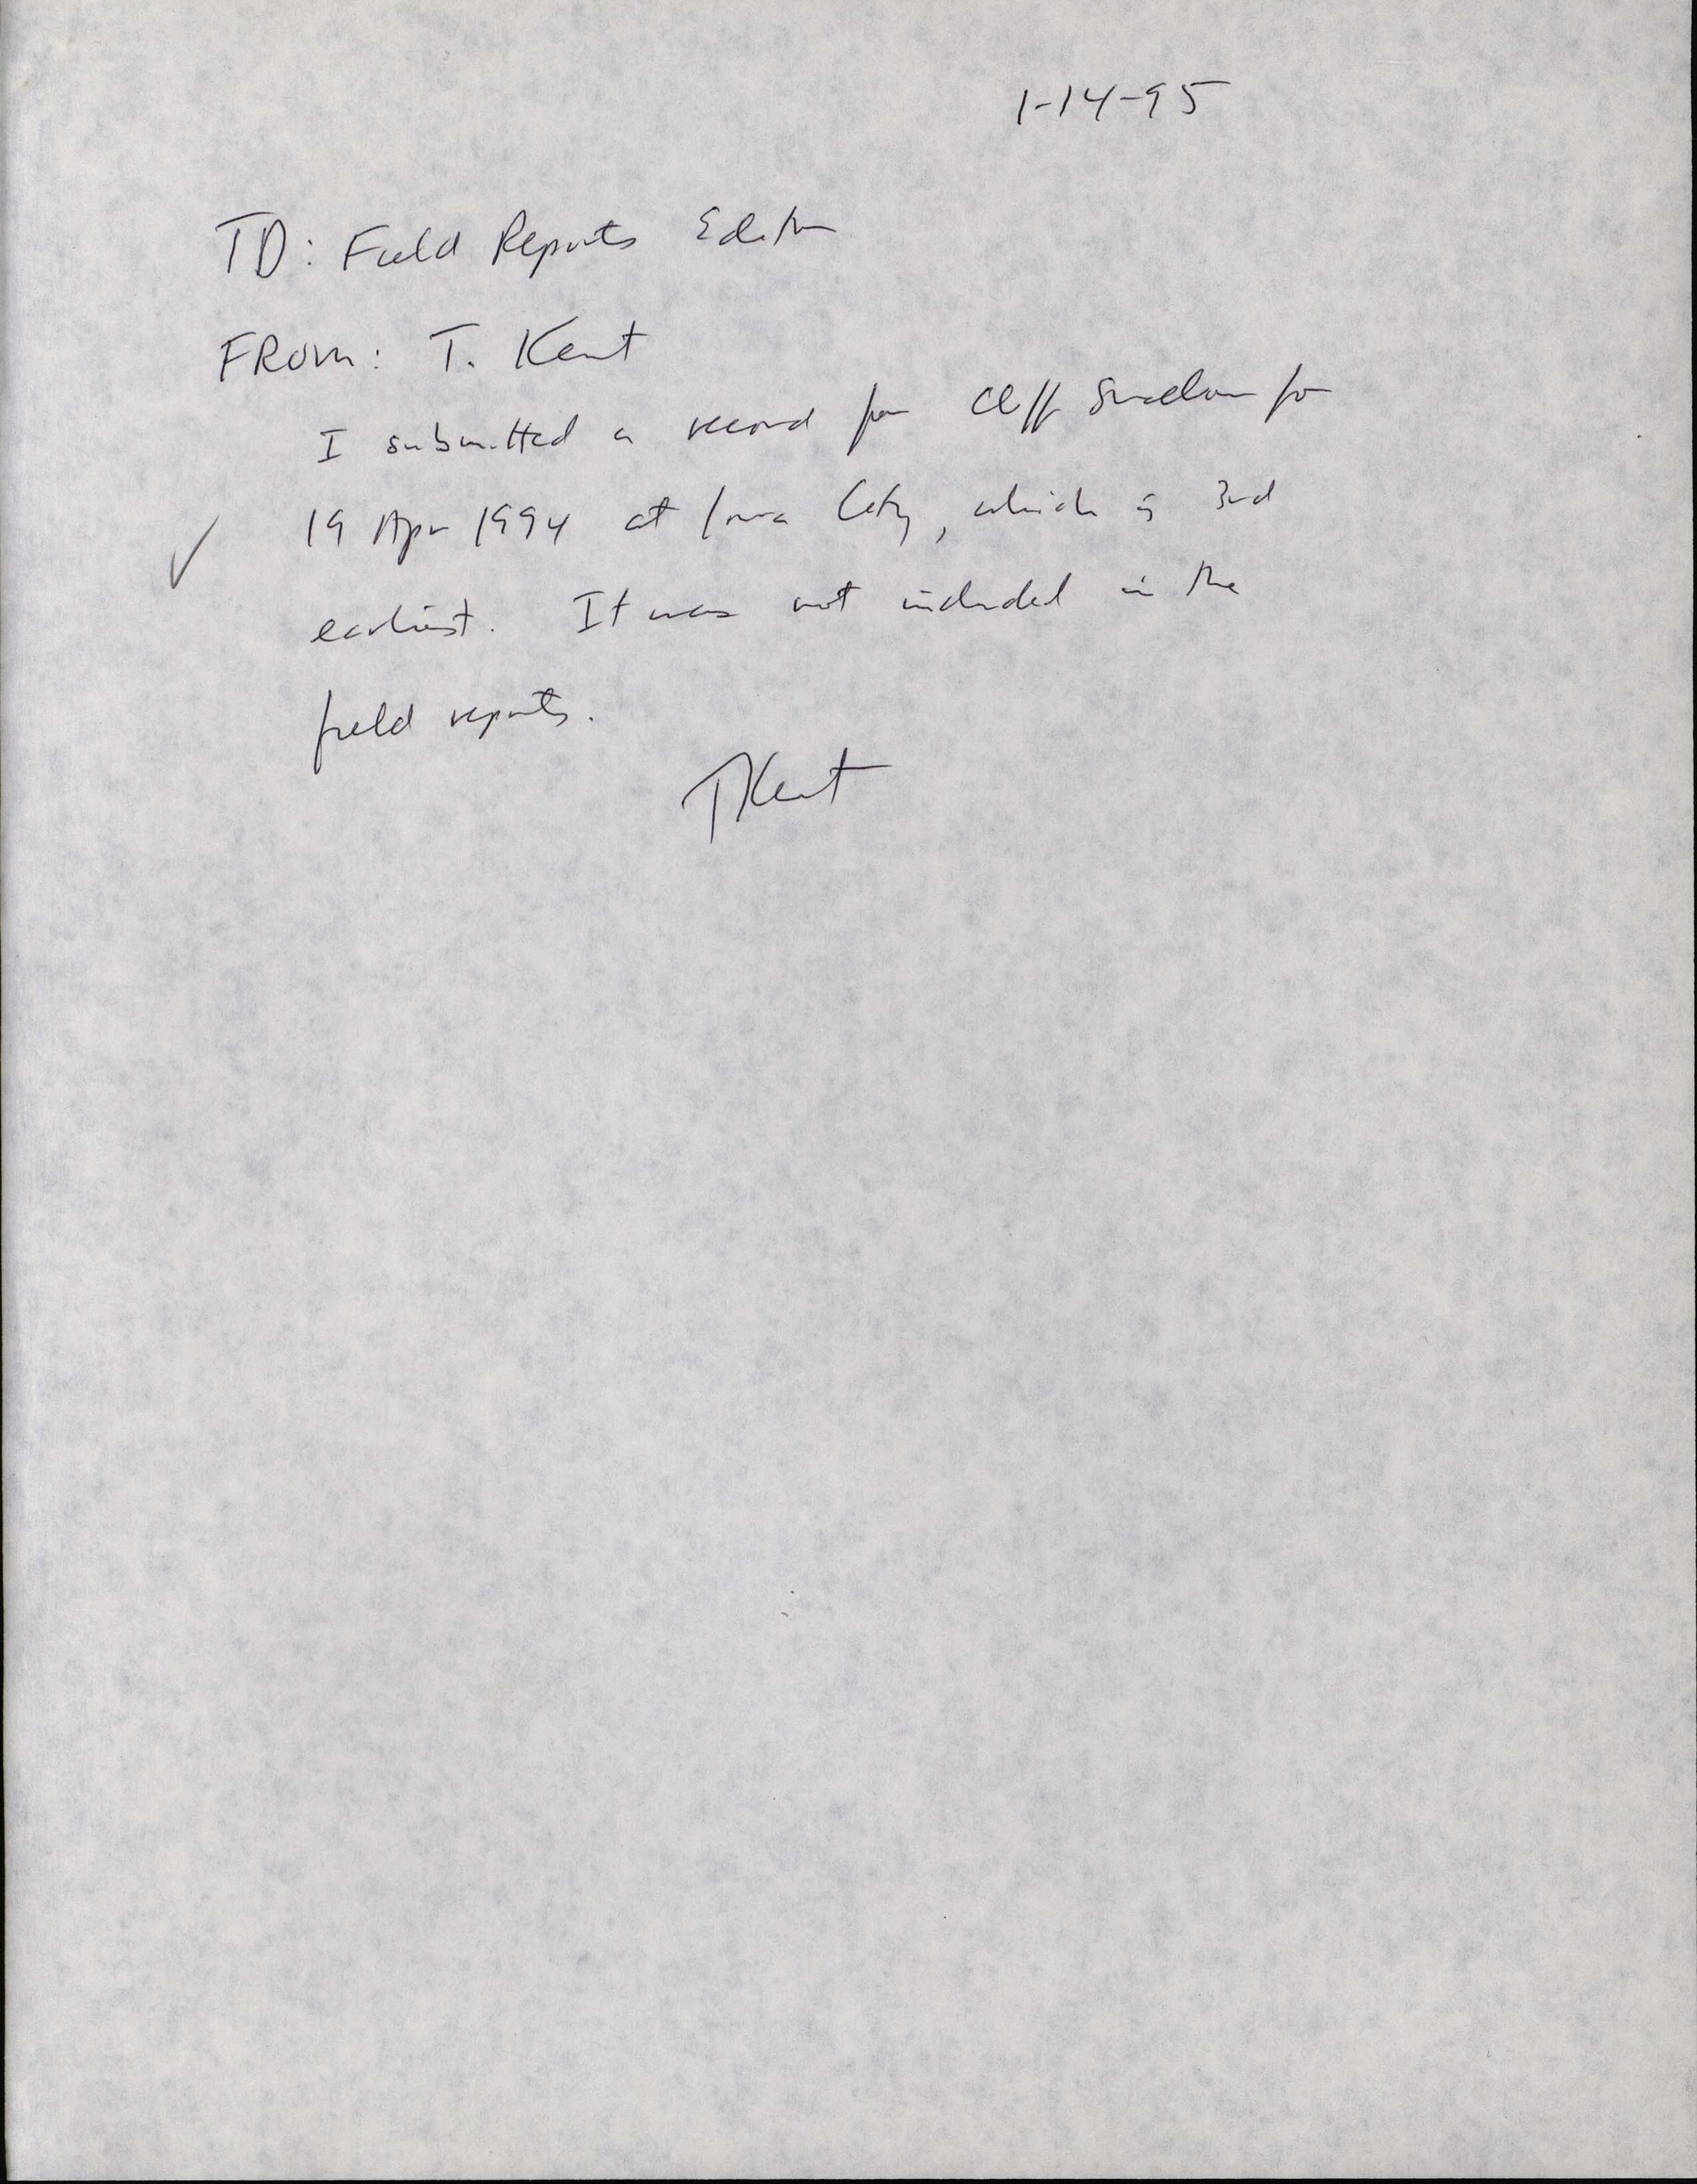 Thomas Kent letter to James Fuller regarding Cliff Swallow sighting, January 14, 1995